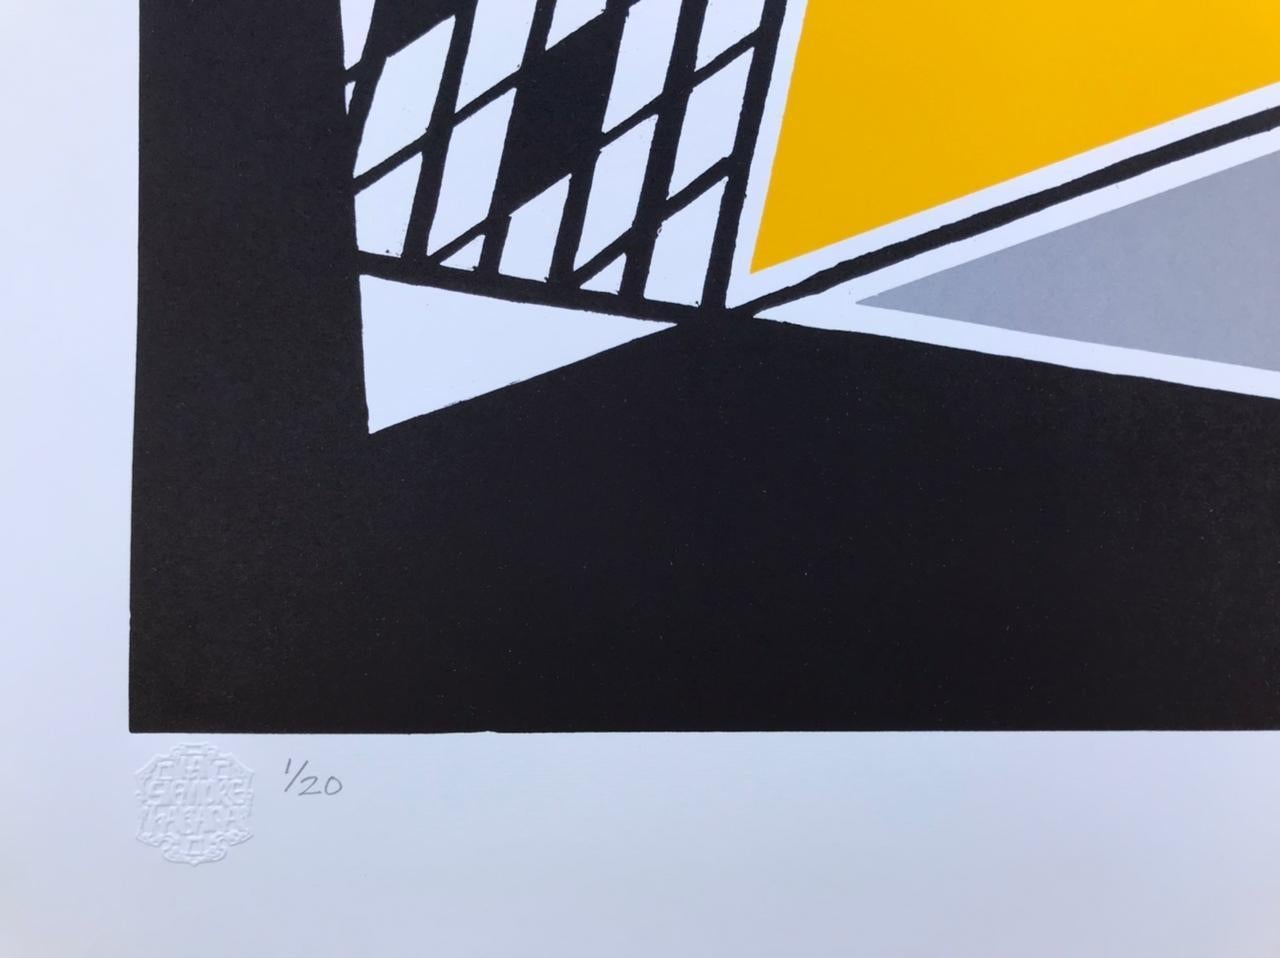 Bernardo Navarro Tomas (Cuba, 1977)
'Untitled (triángulos planos de color)', 2021
woodcut, silkscreen on paper Guarro Biblos 250g.
27.8 x 21.5 in. (70.5 x 54.5 cm.)
Edition of 20
ID: NAA-114
Hand-signed by author